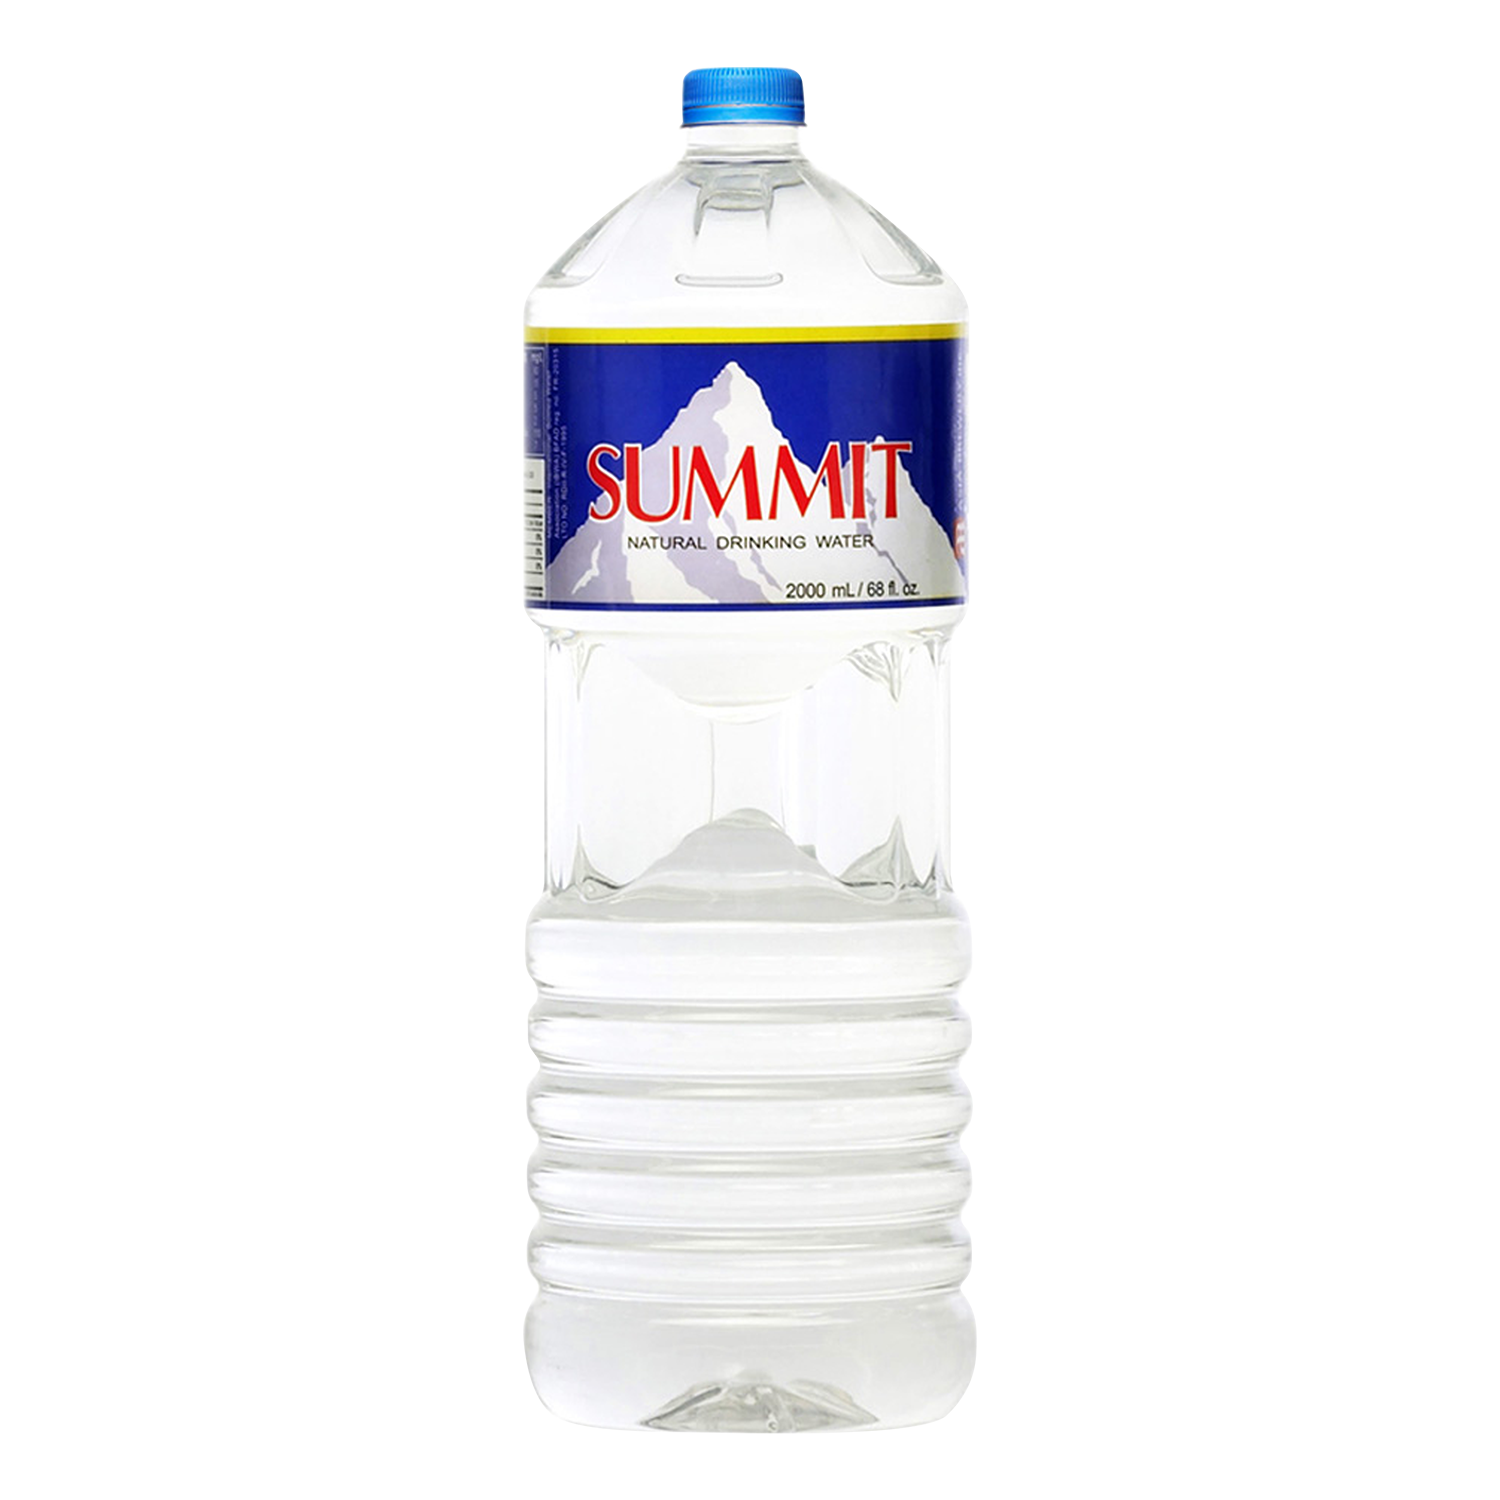 Summit Natural Drinking Water (2L x 6 bottles)